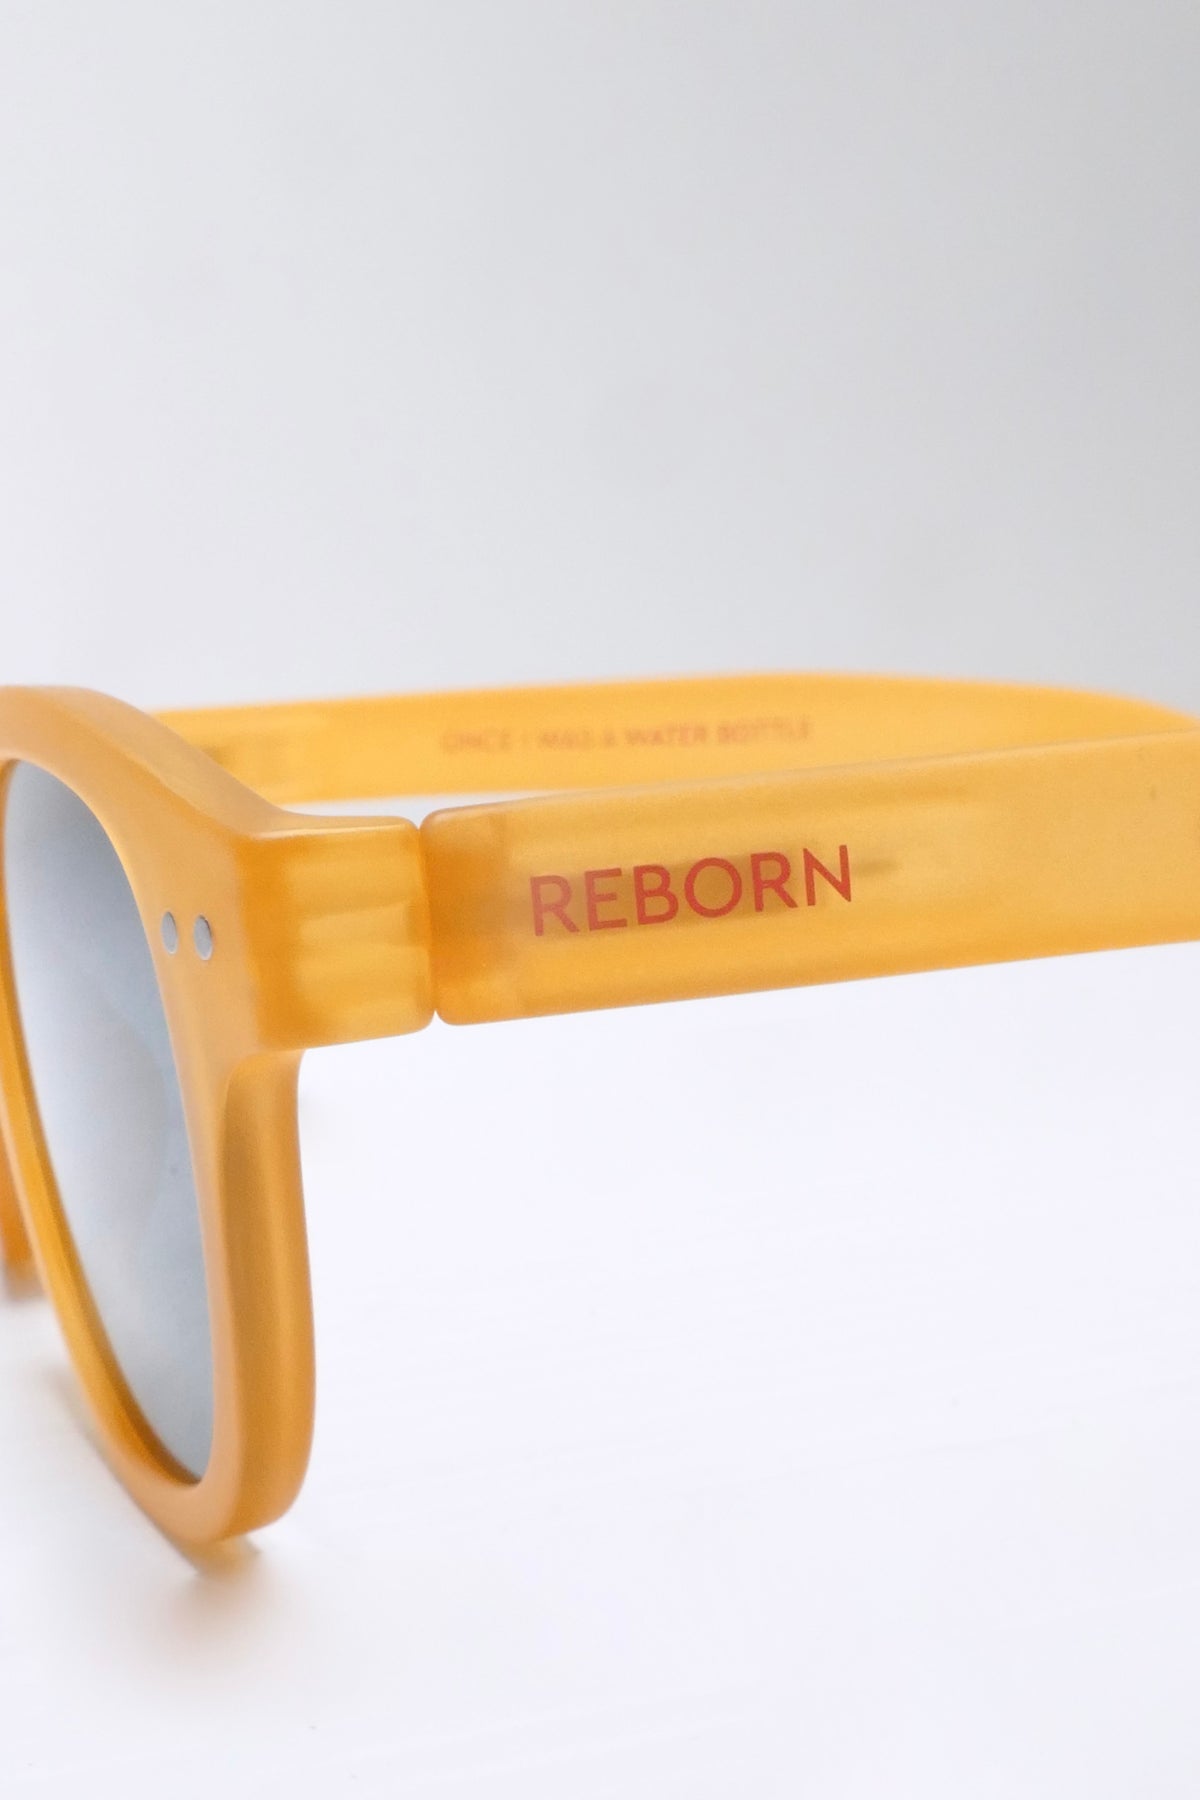 WEAREEYES Reborn Sunglasses - Yellow